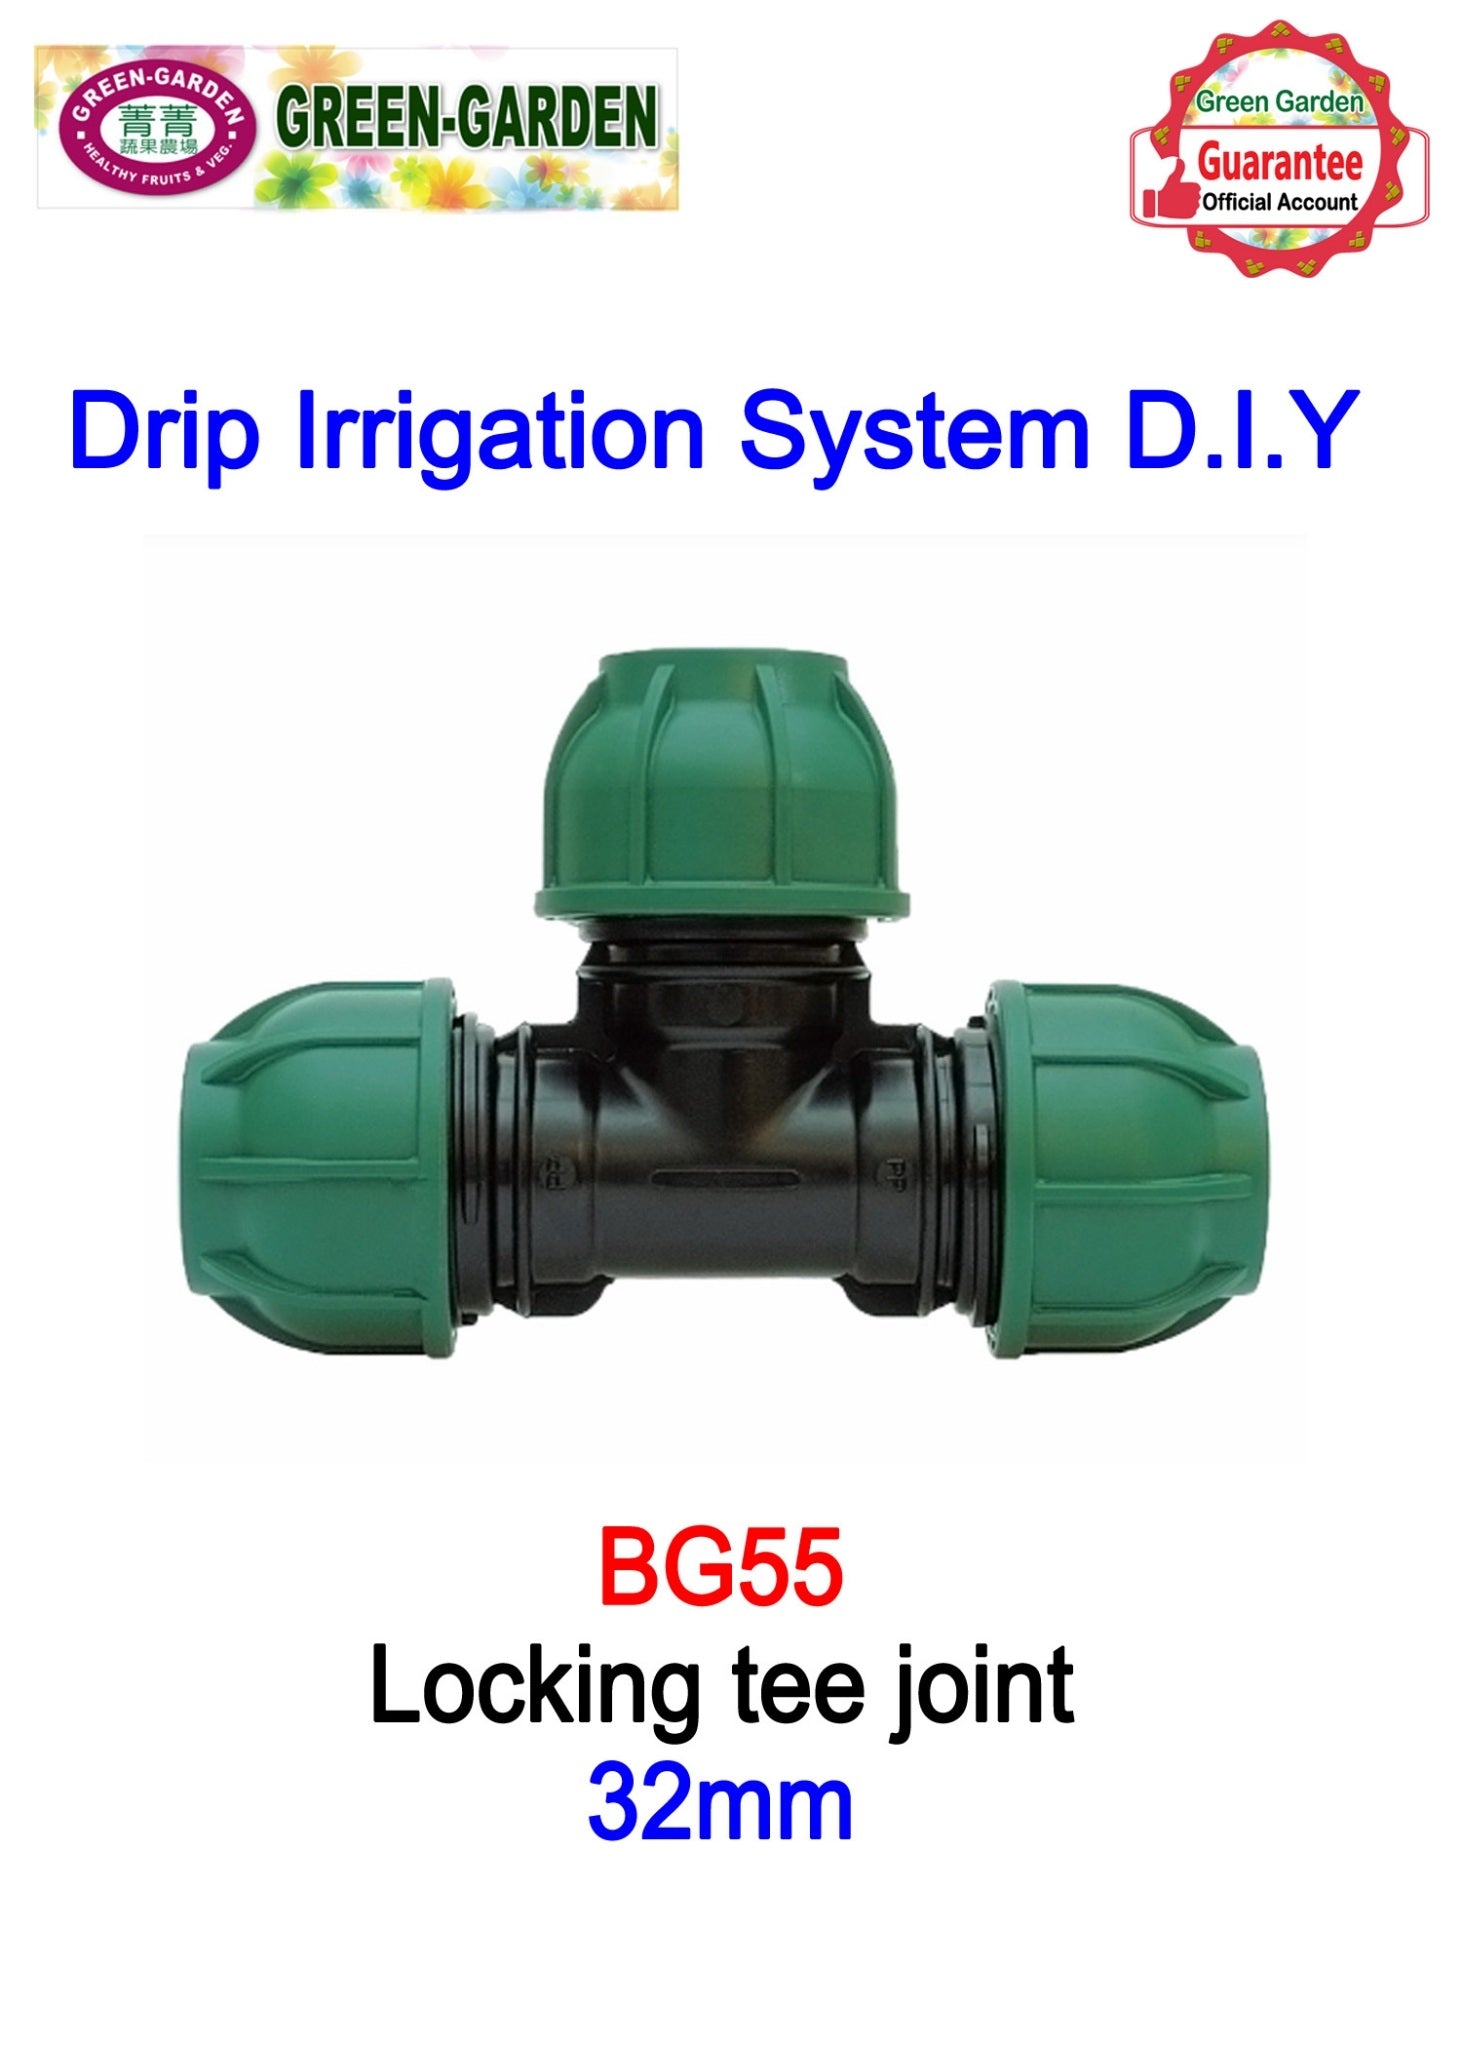 Drip Irrigation System - 32mm lock tee joint BG55